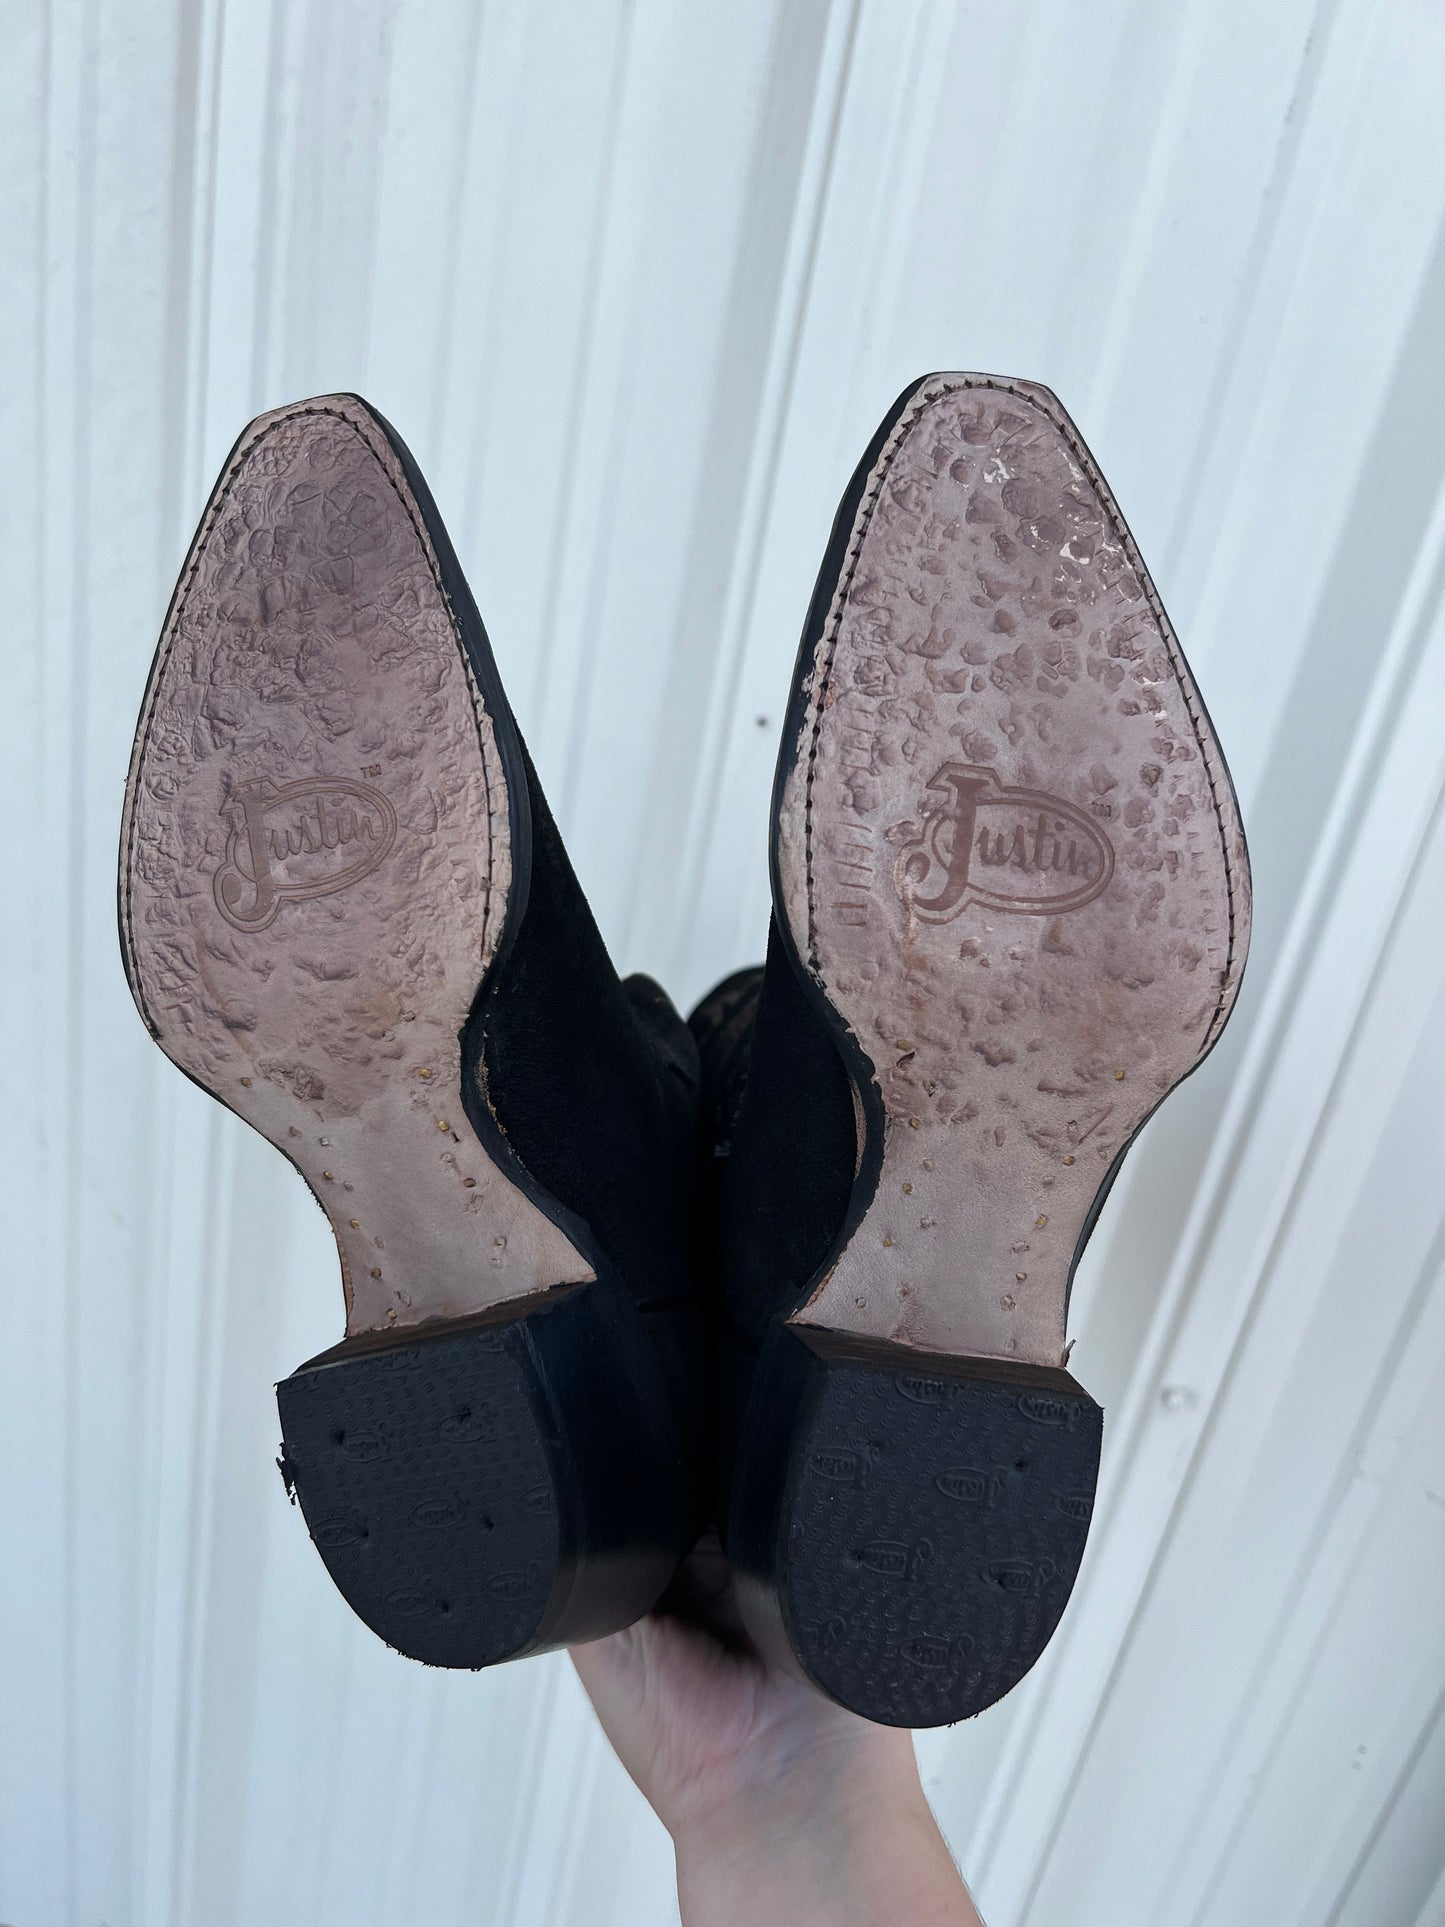 Women’s Justin Clara Black Suede Boots